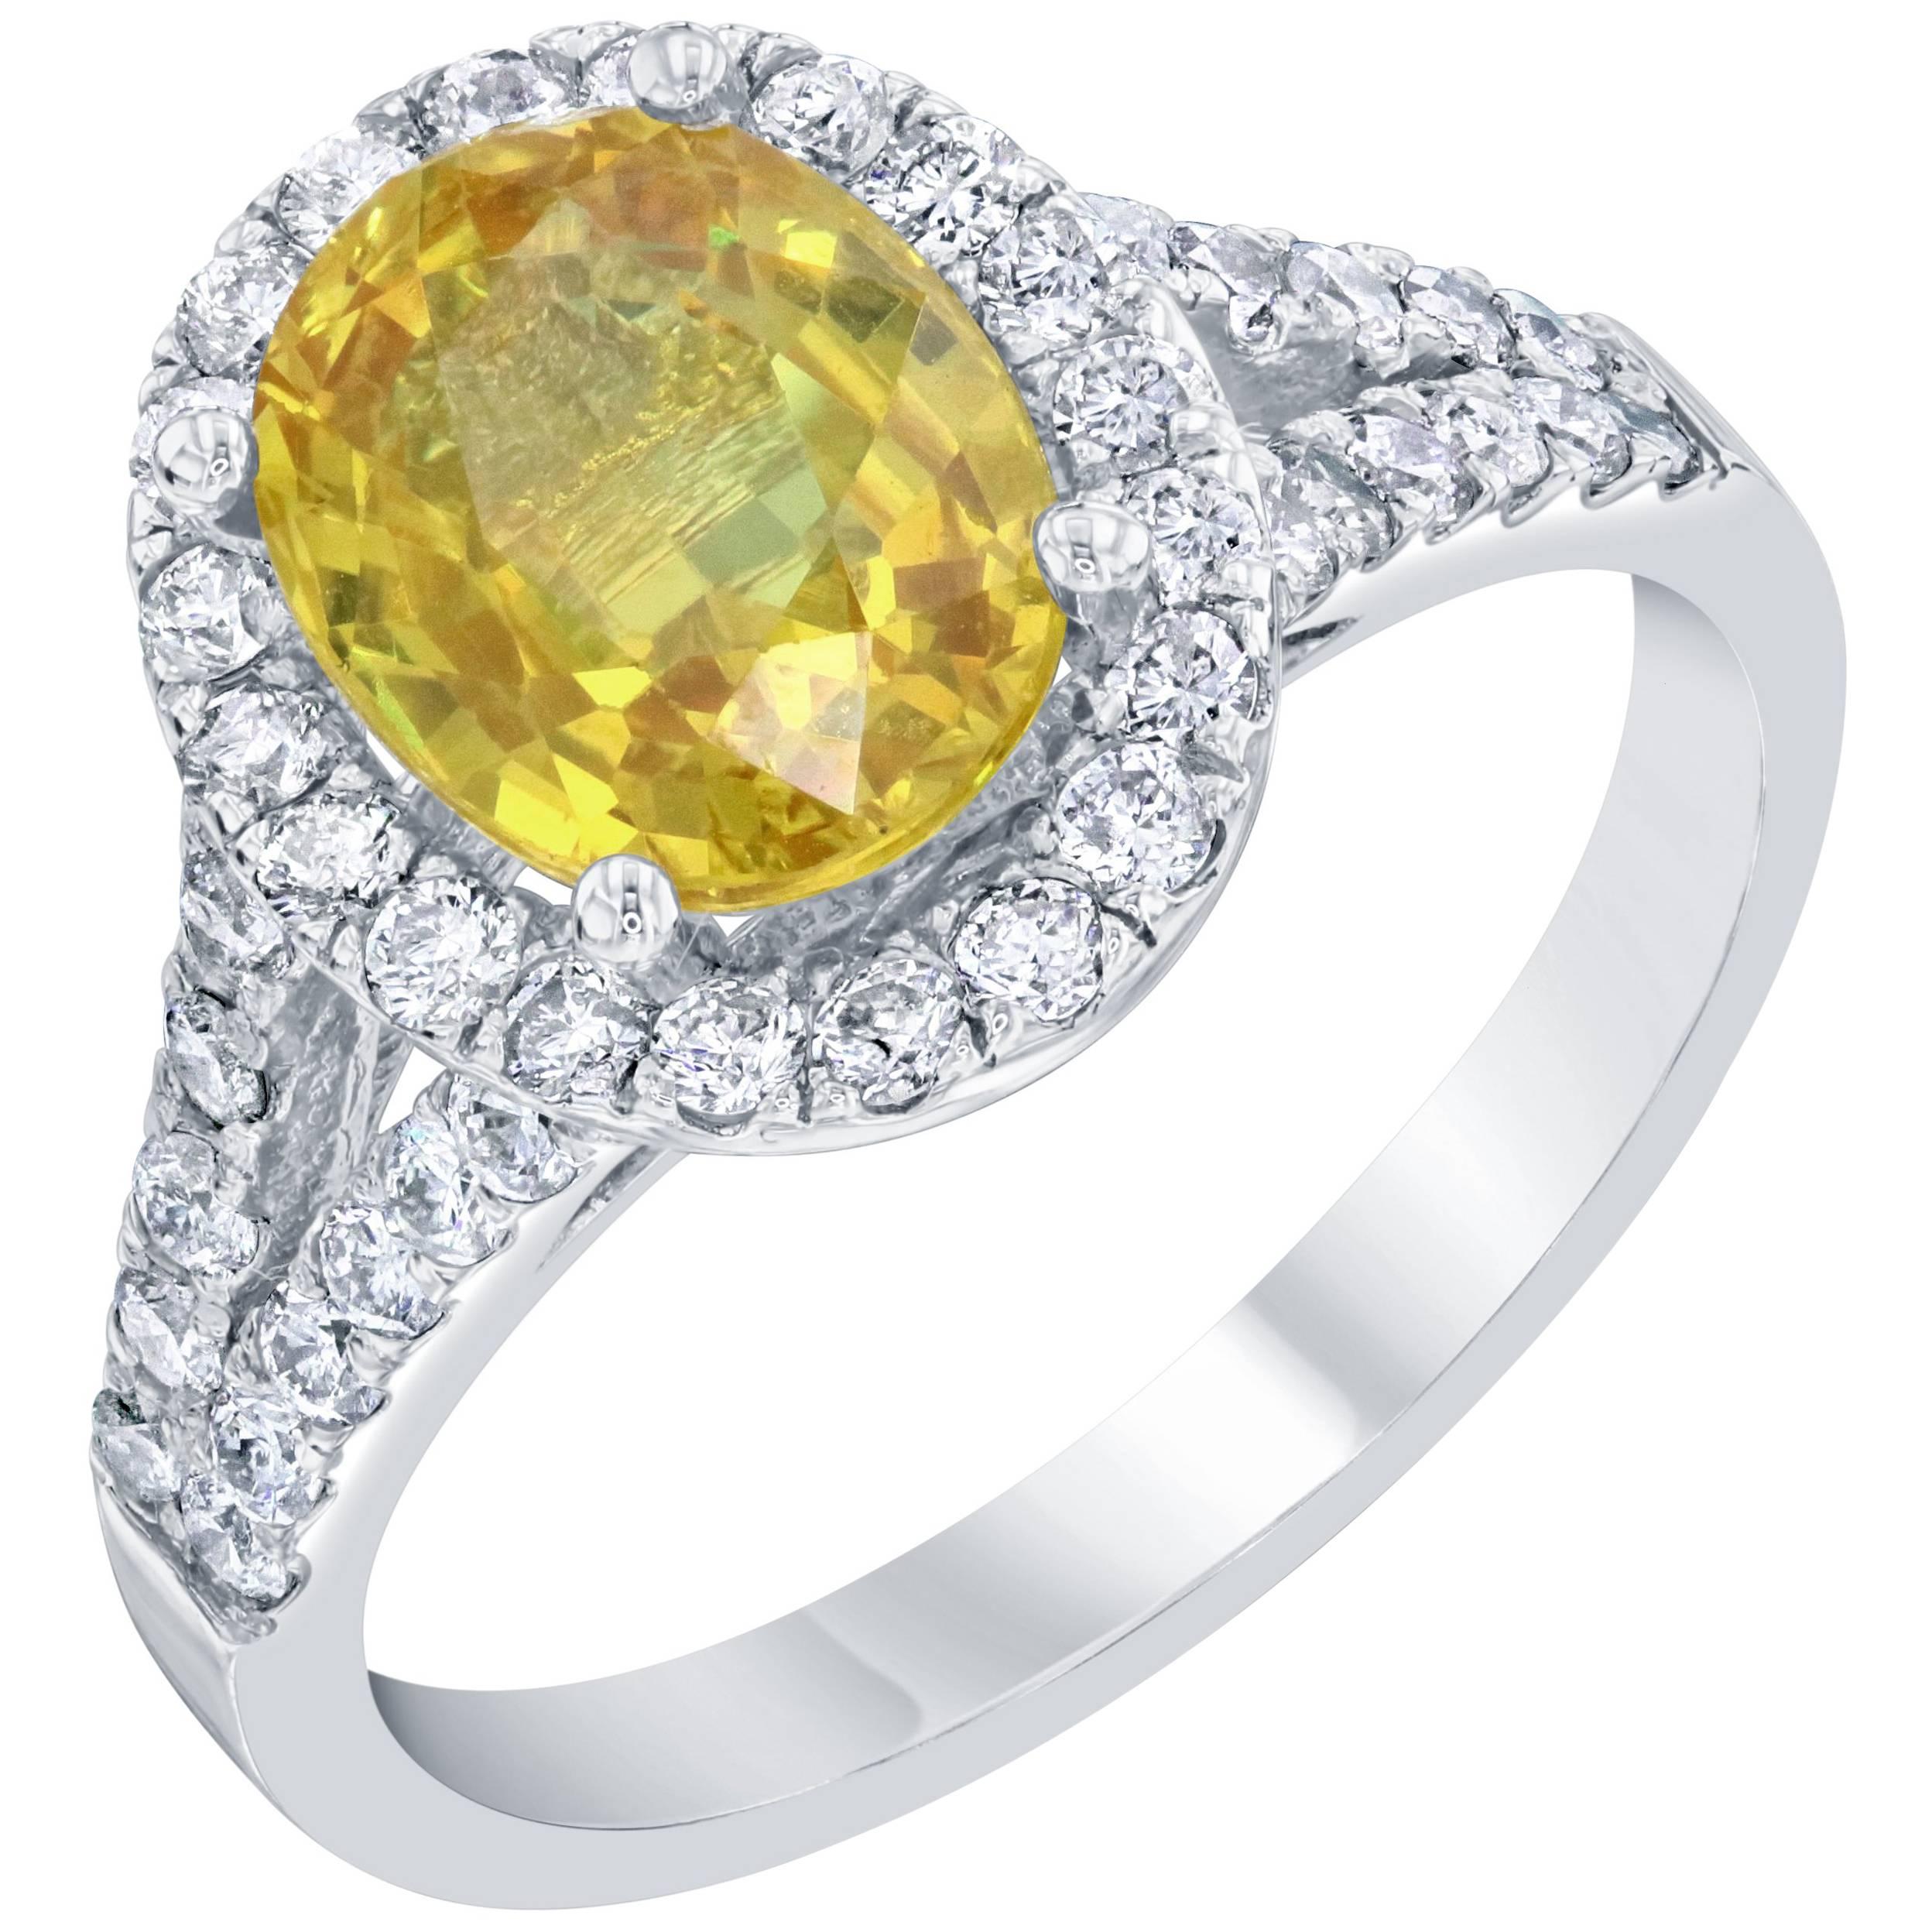 3.49 Carat Yellow Sapphire Diamond Ring